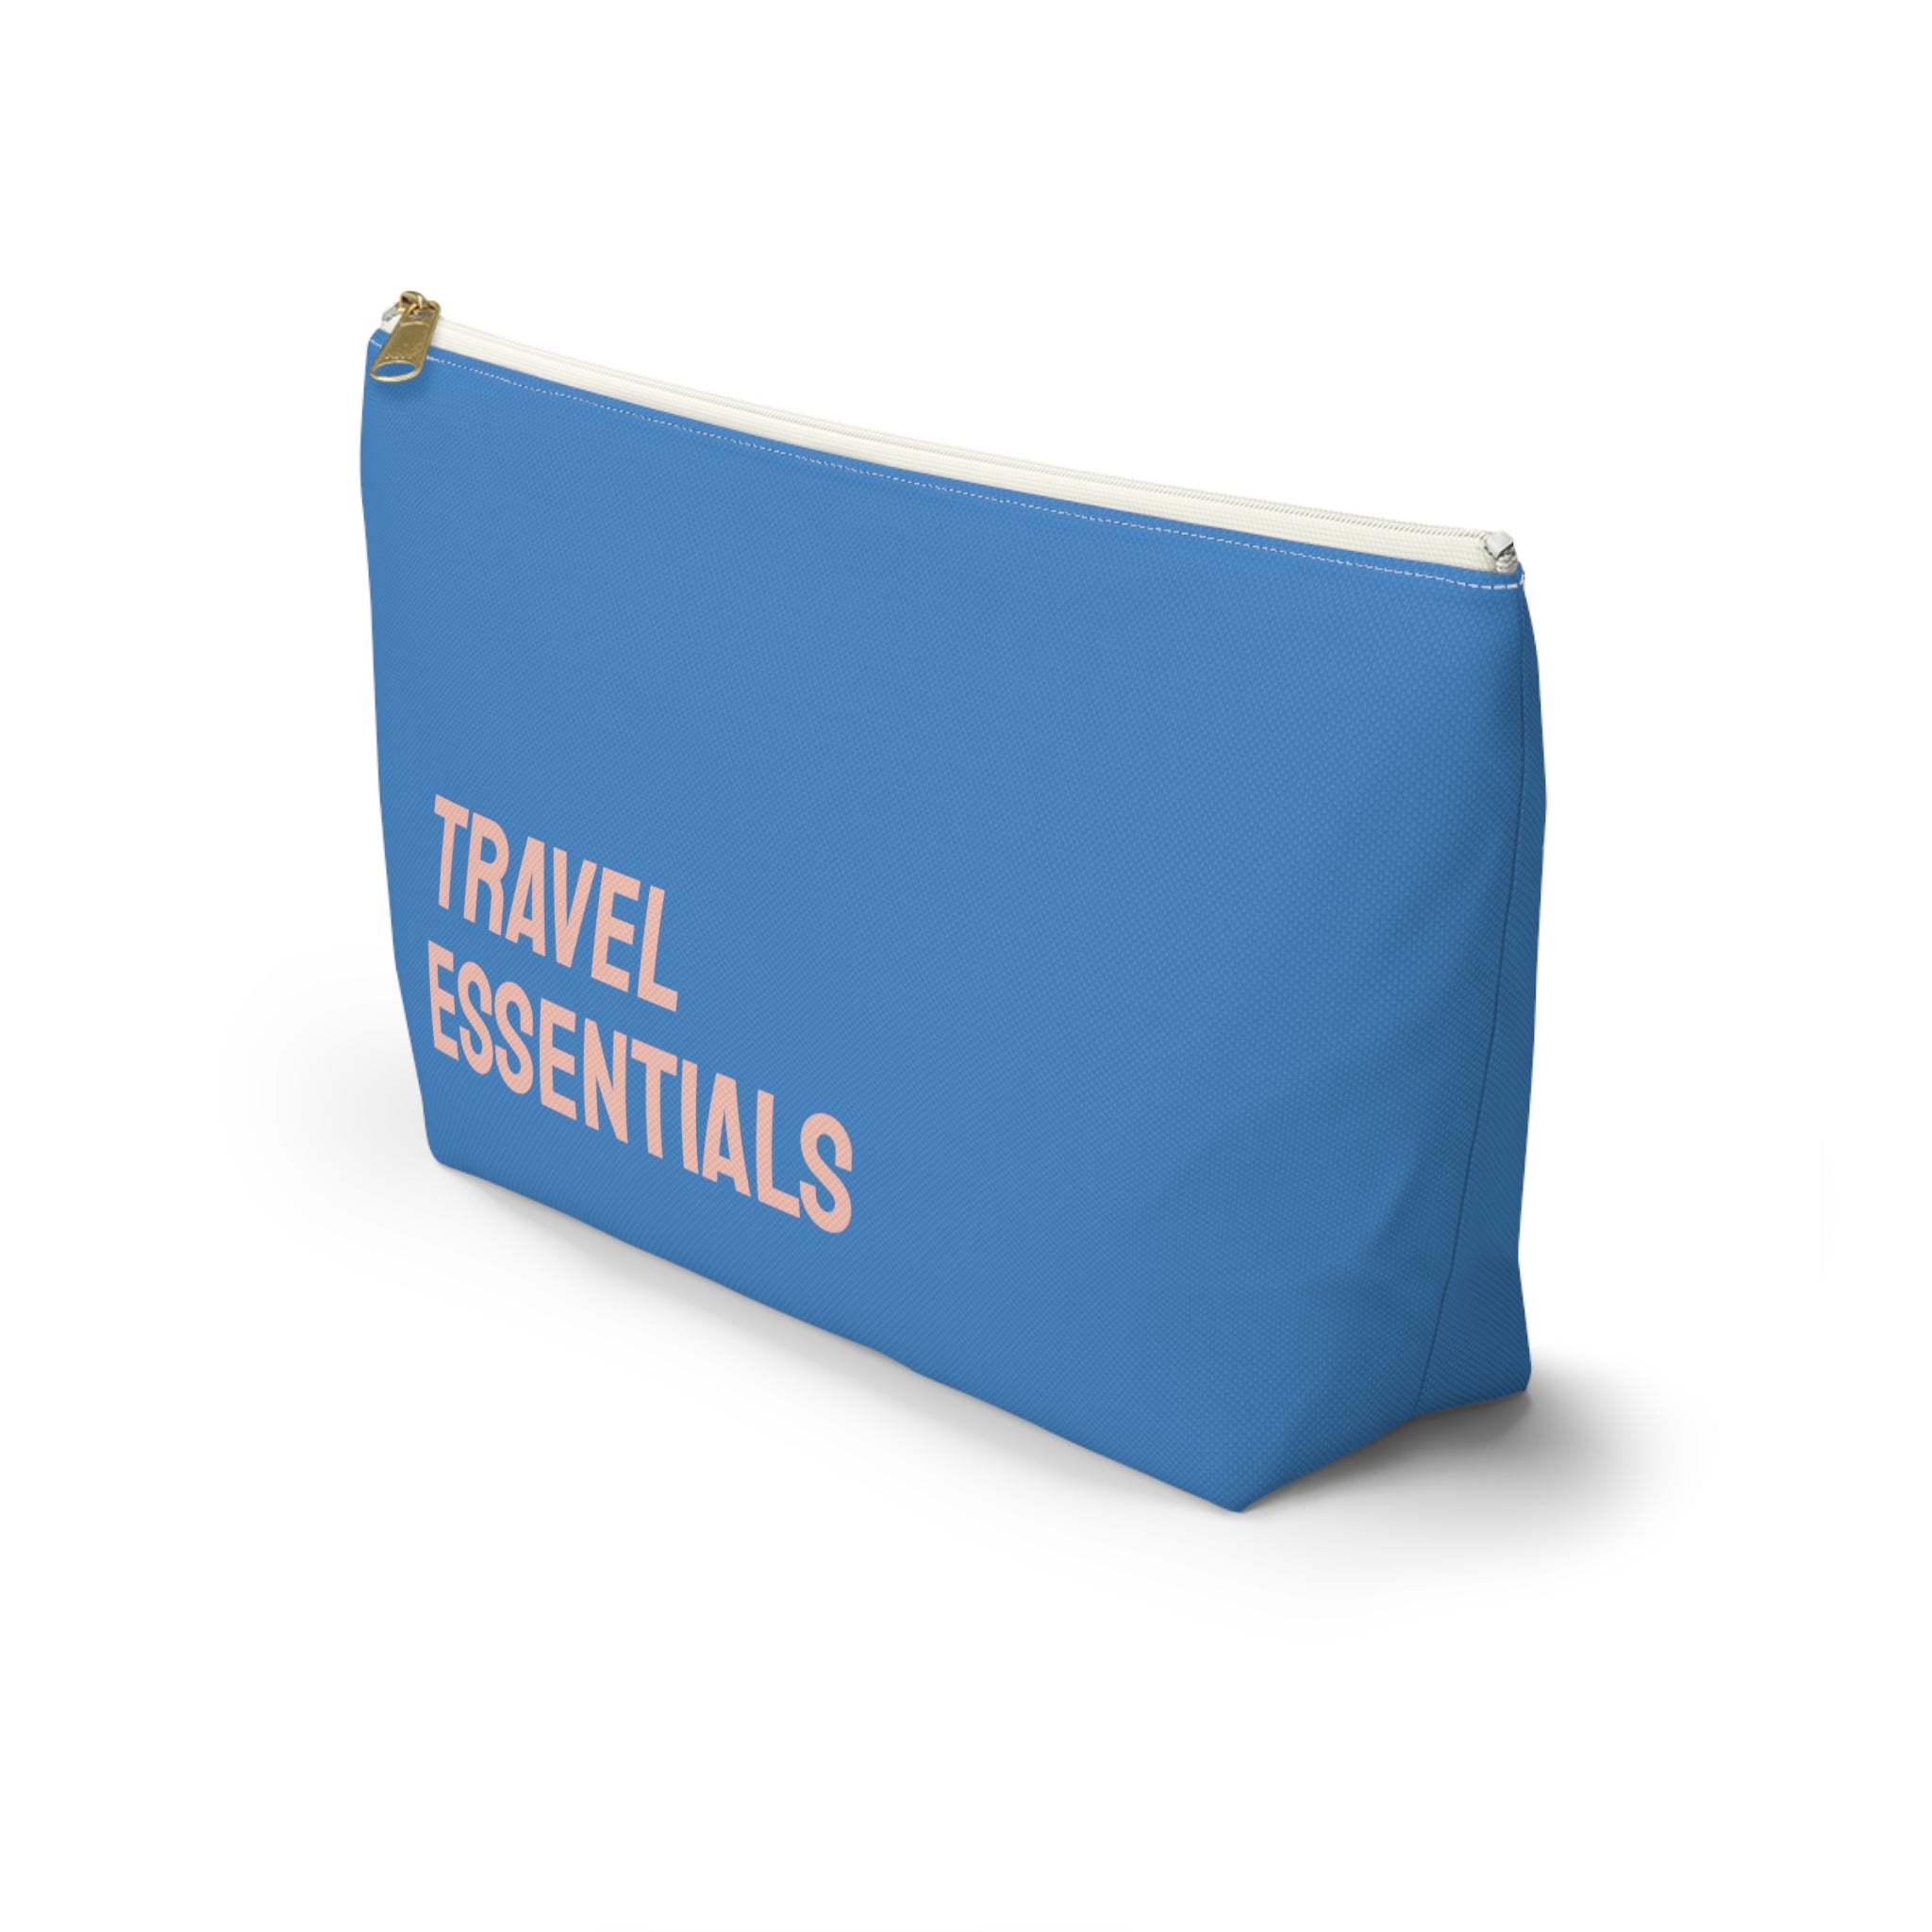 Travel essentials Pouch (Multi)